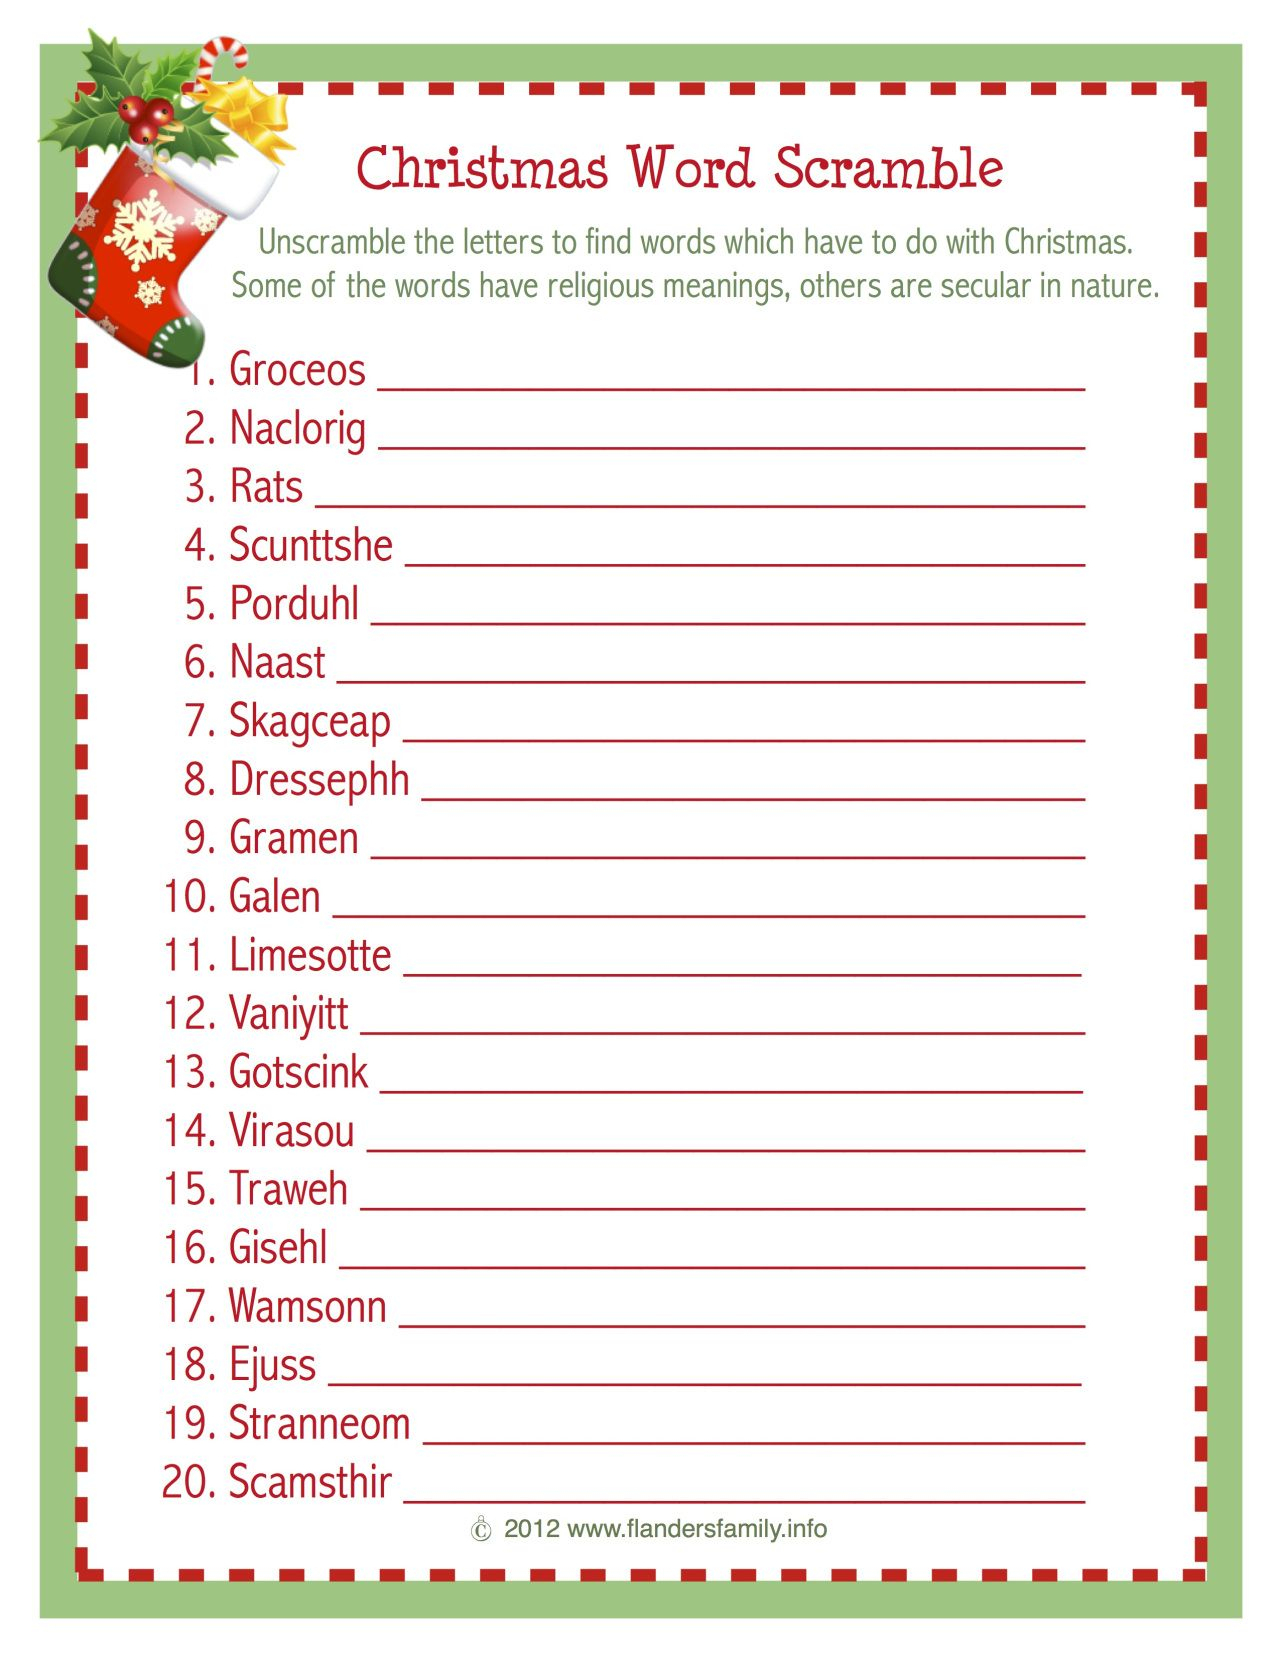 Christmas-Word-Scramble-Full-Page-Version | Party Hard | Pinterest - Christmas Song Scramble Free Printable